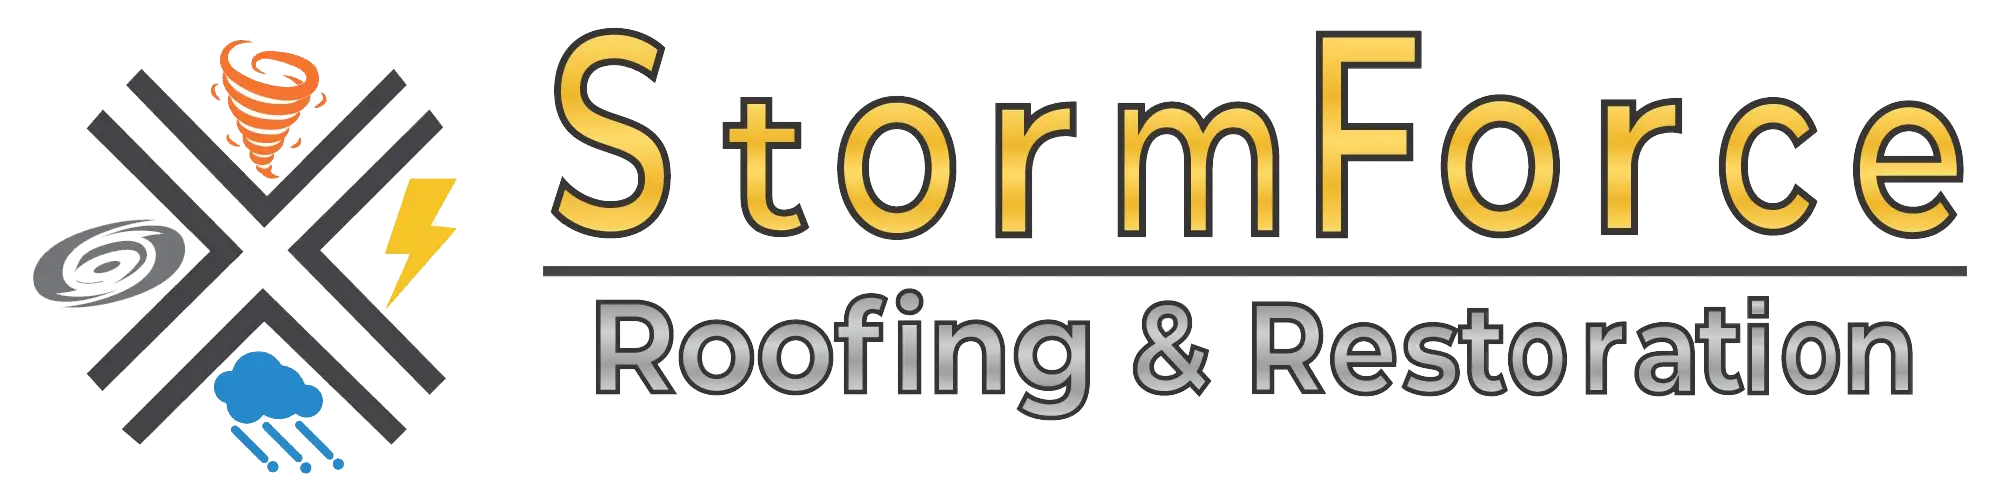 StormForce Roofing & Restoration Logo